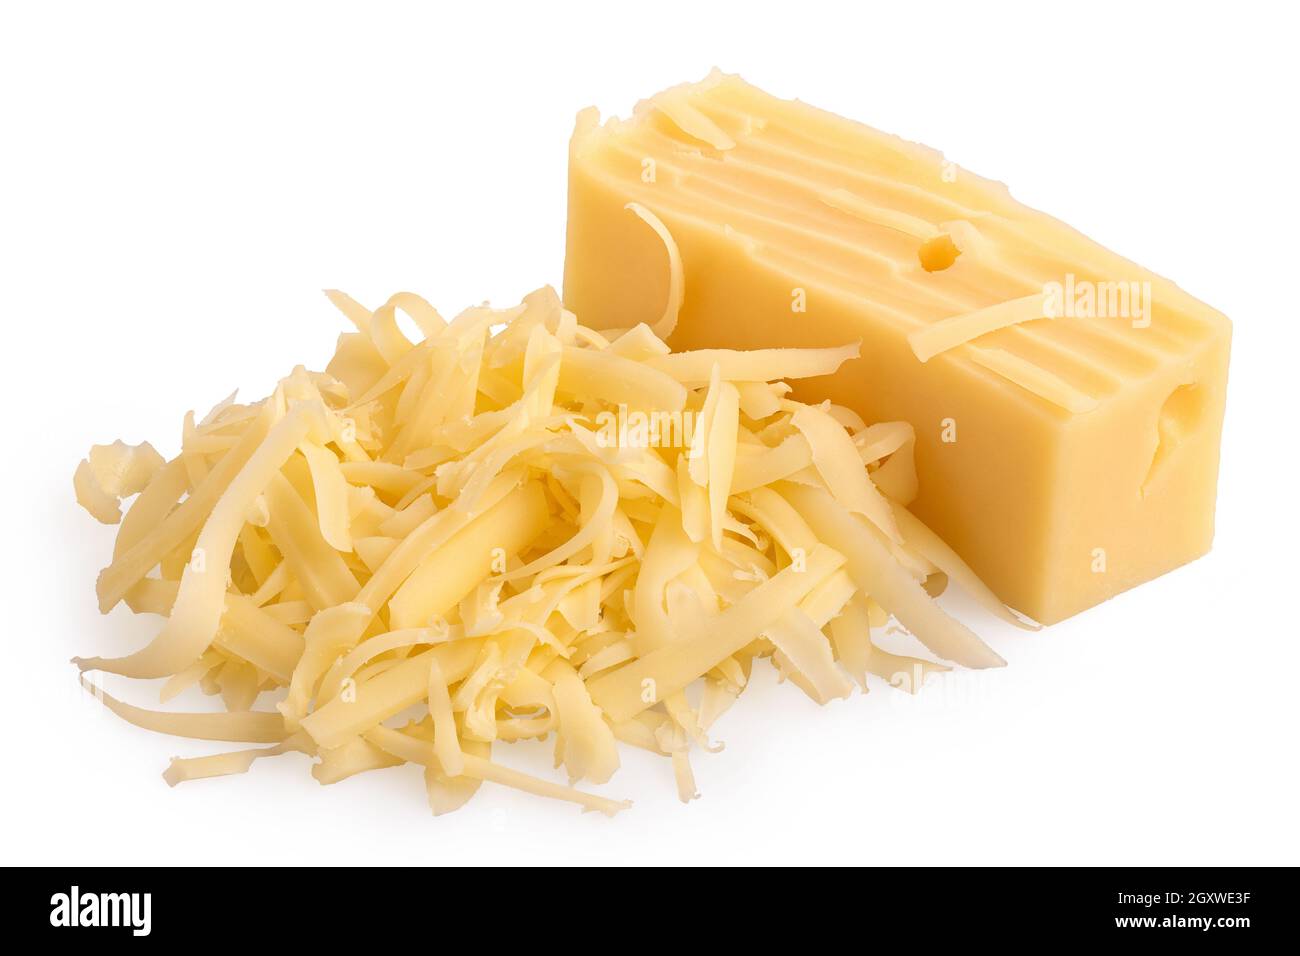 Montón de queso rallado junto a un bloque de queso. Foto de stock